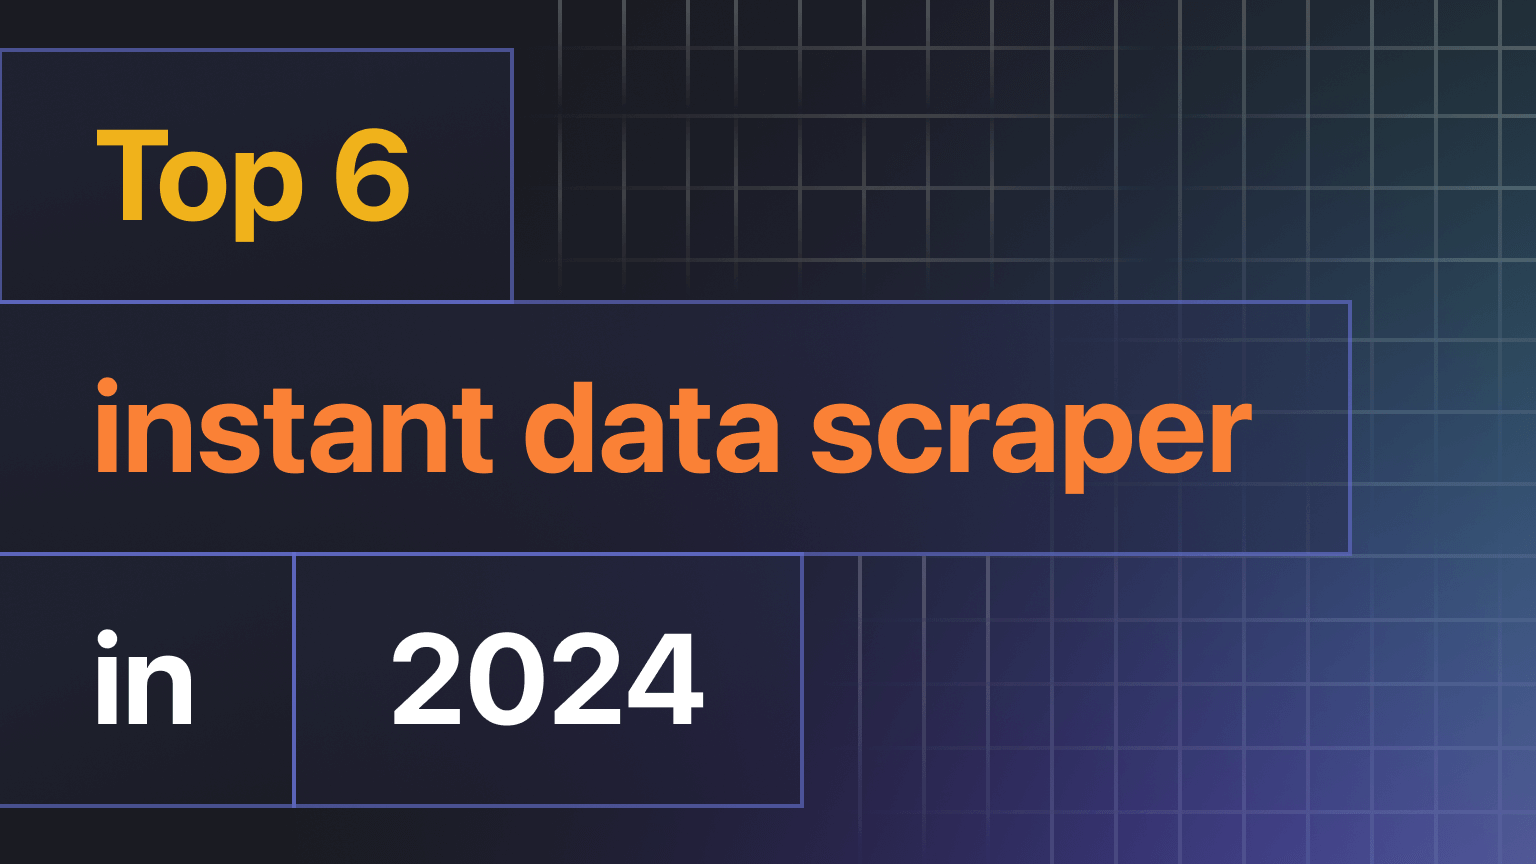 The top 6 instant data scrapers in 2024